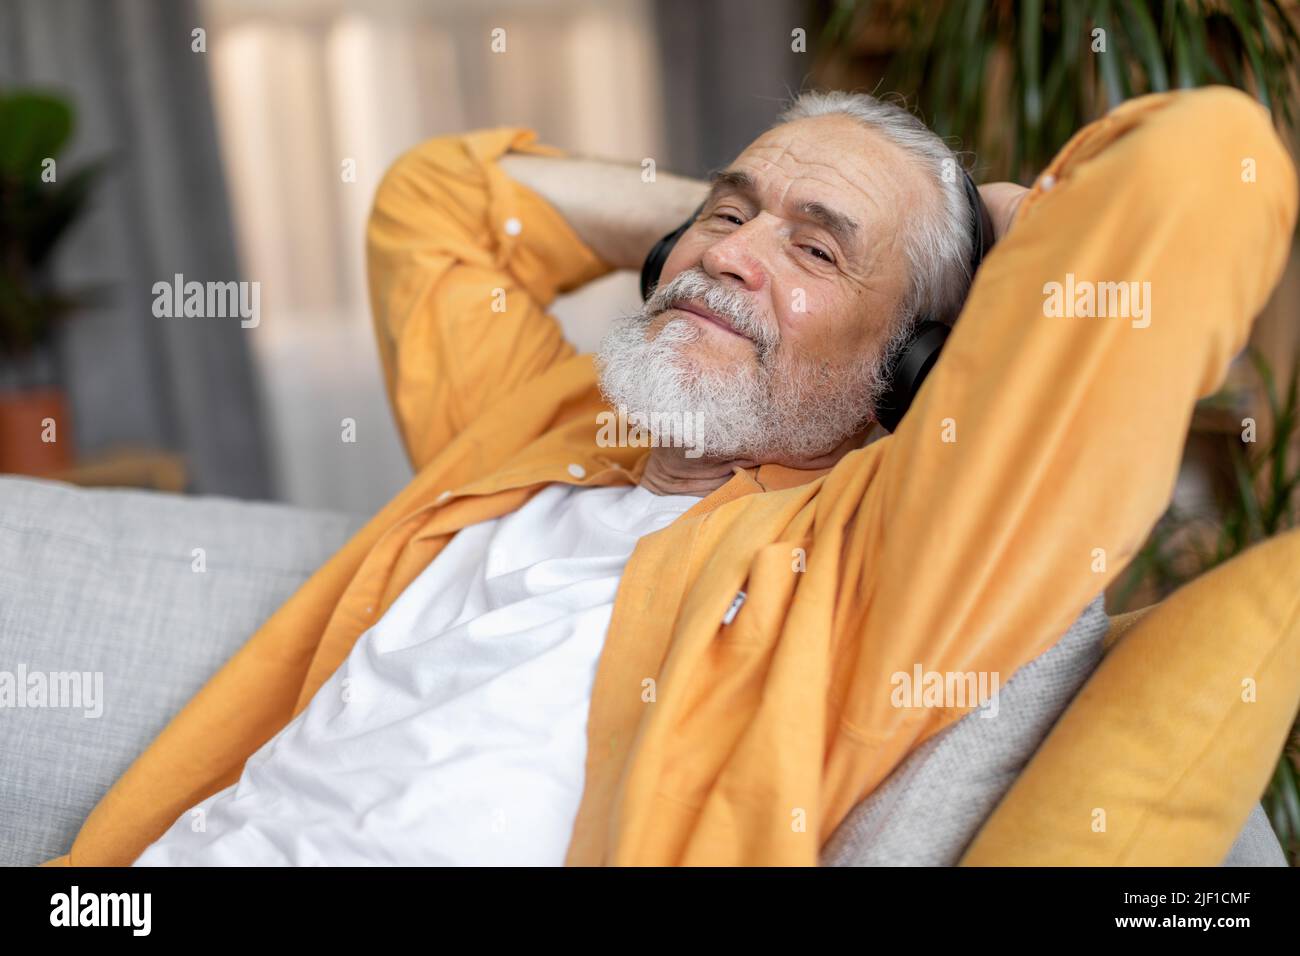 Good-looking elderly man enjoying newest wireless headset at home Stock Photo